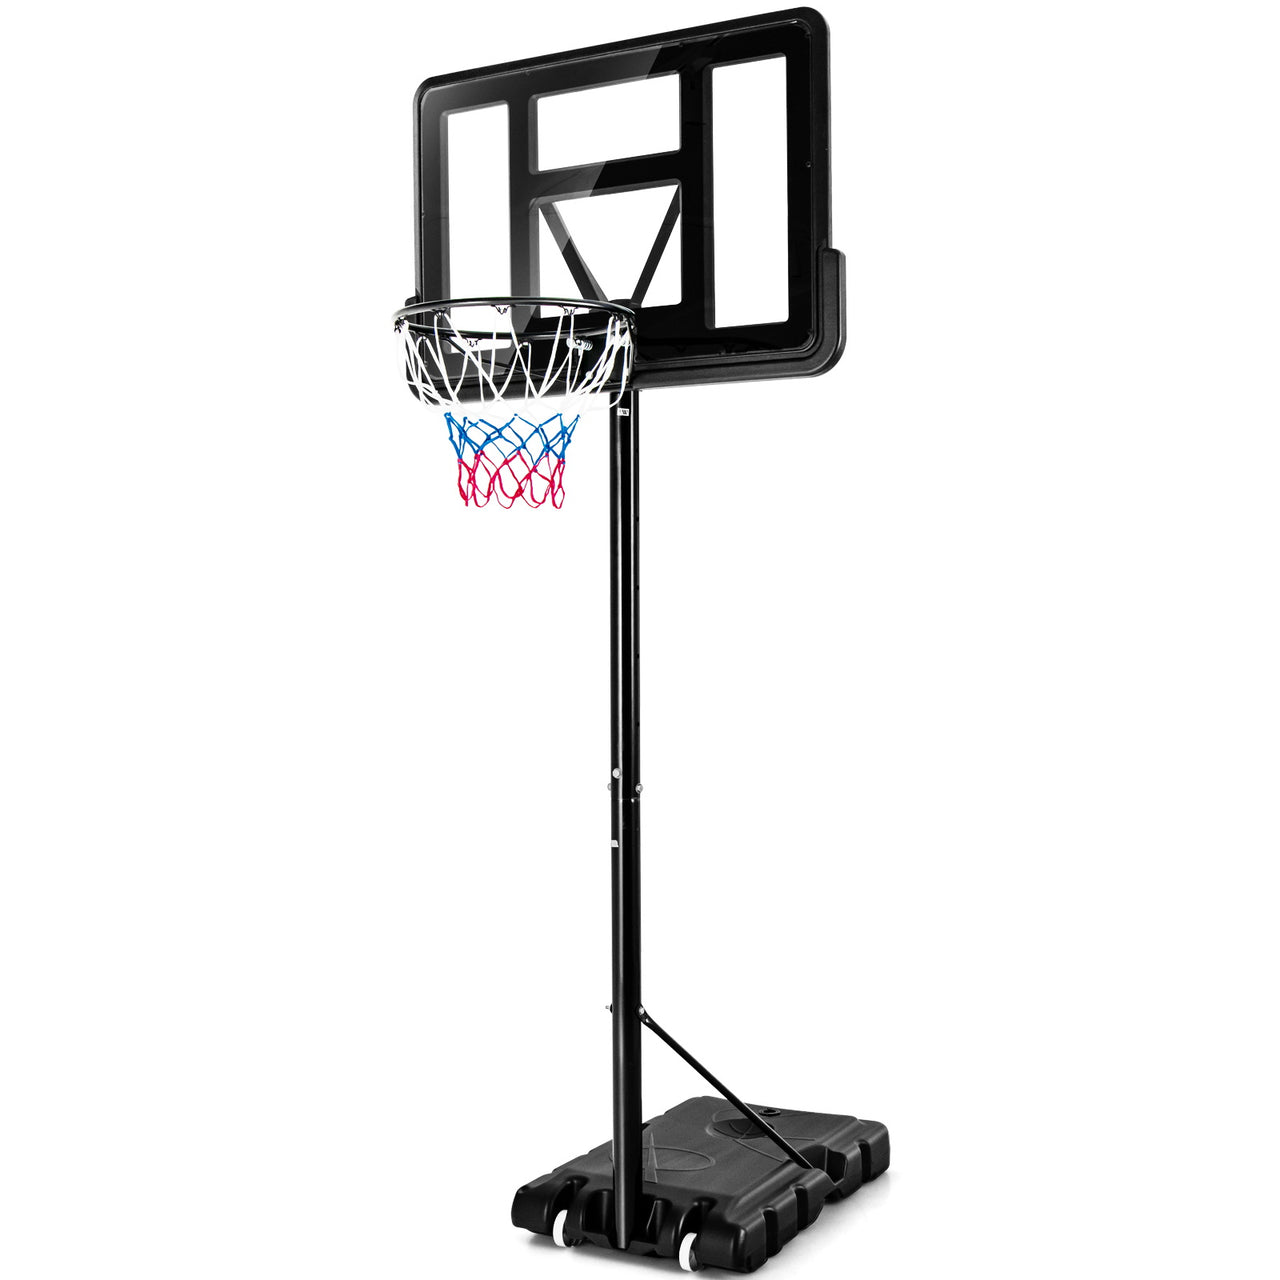 Adjustable Portable Basketball Hoop Stand with Shatterproof Backboard Wheels - Gallery View 3 of 10